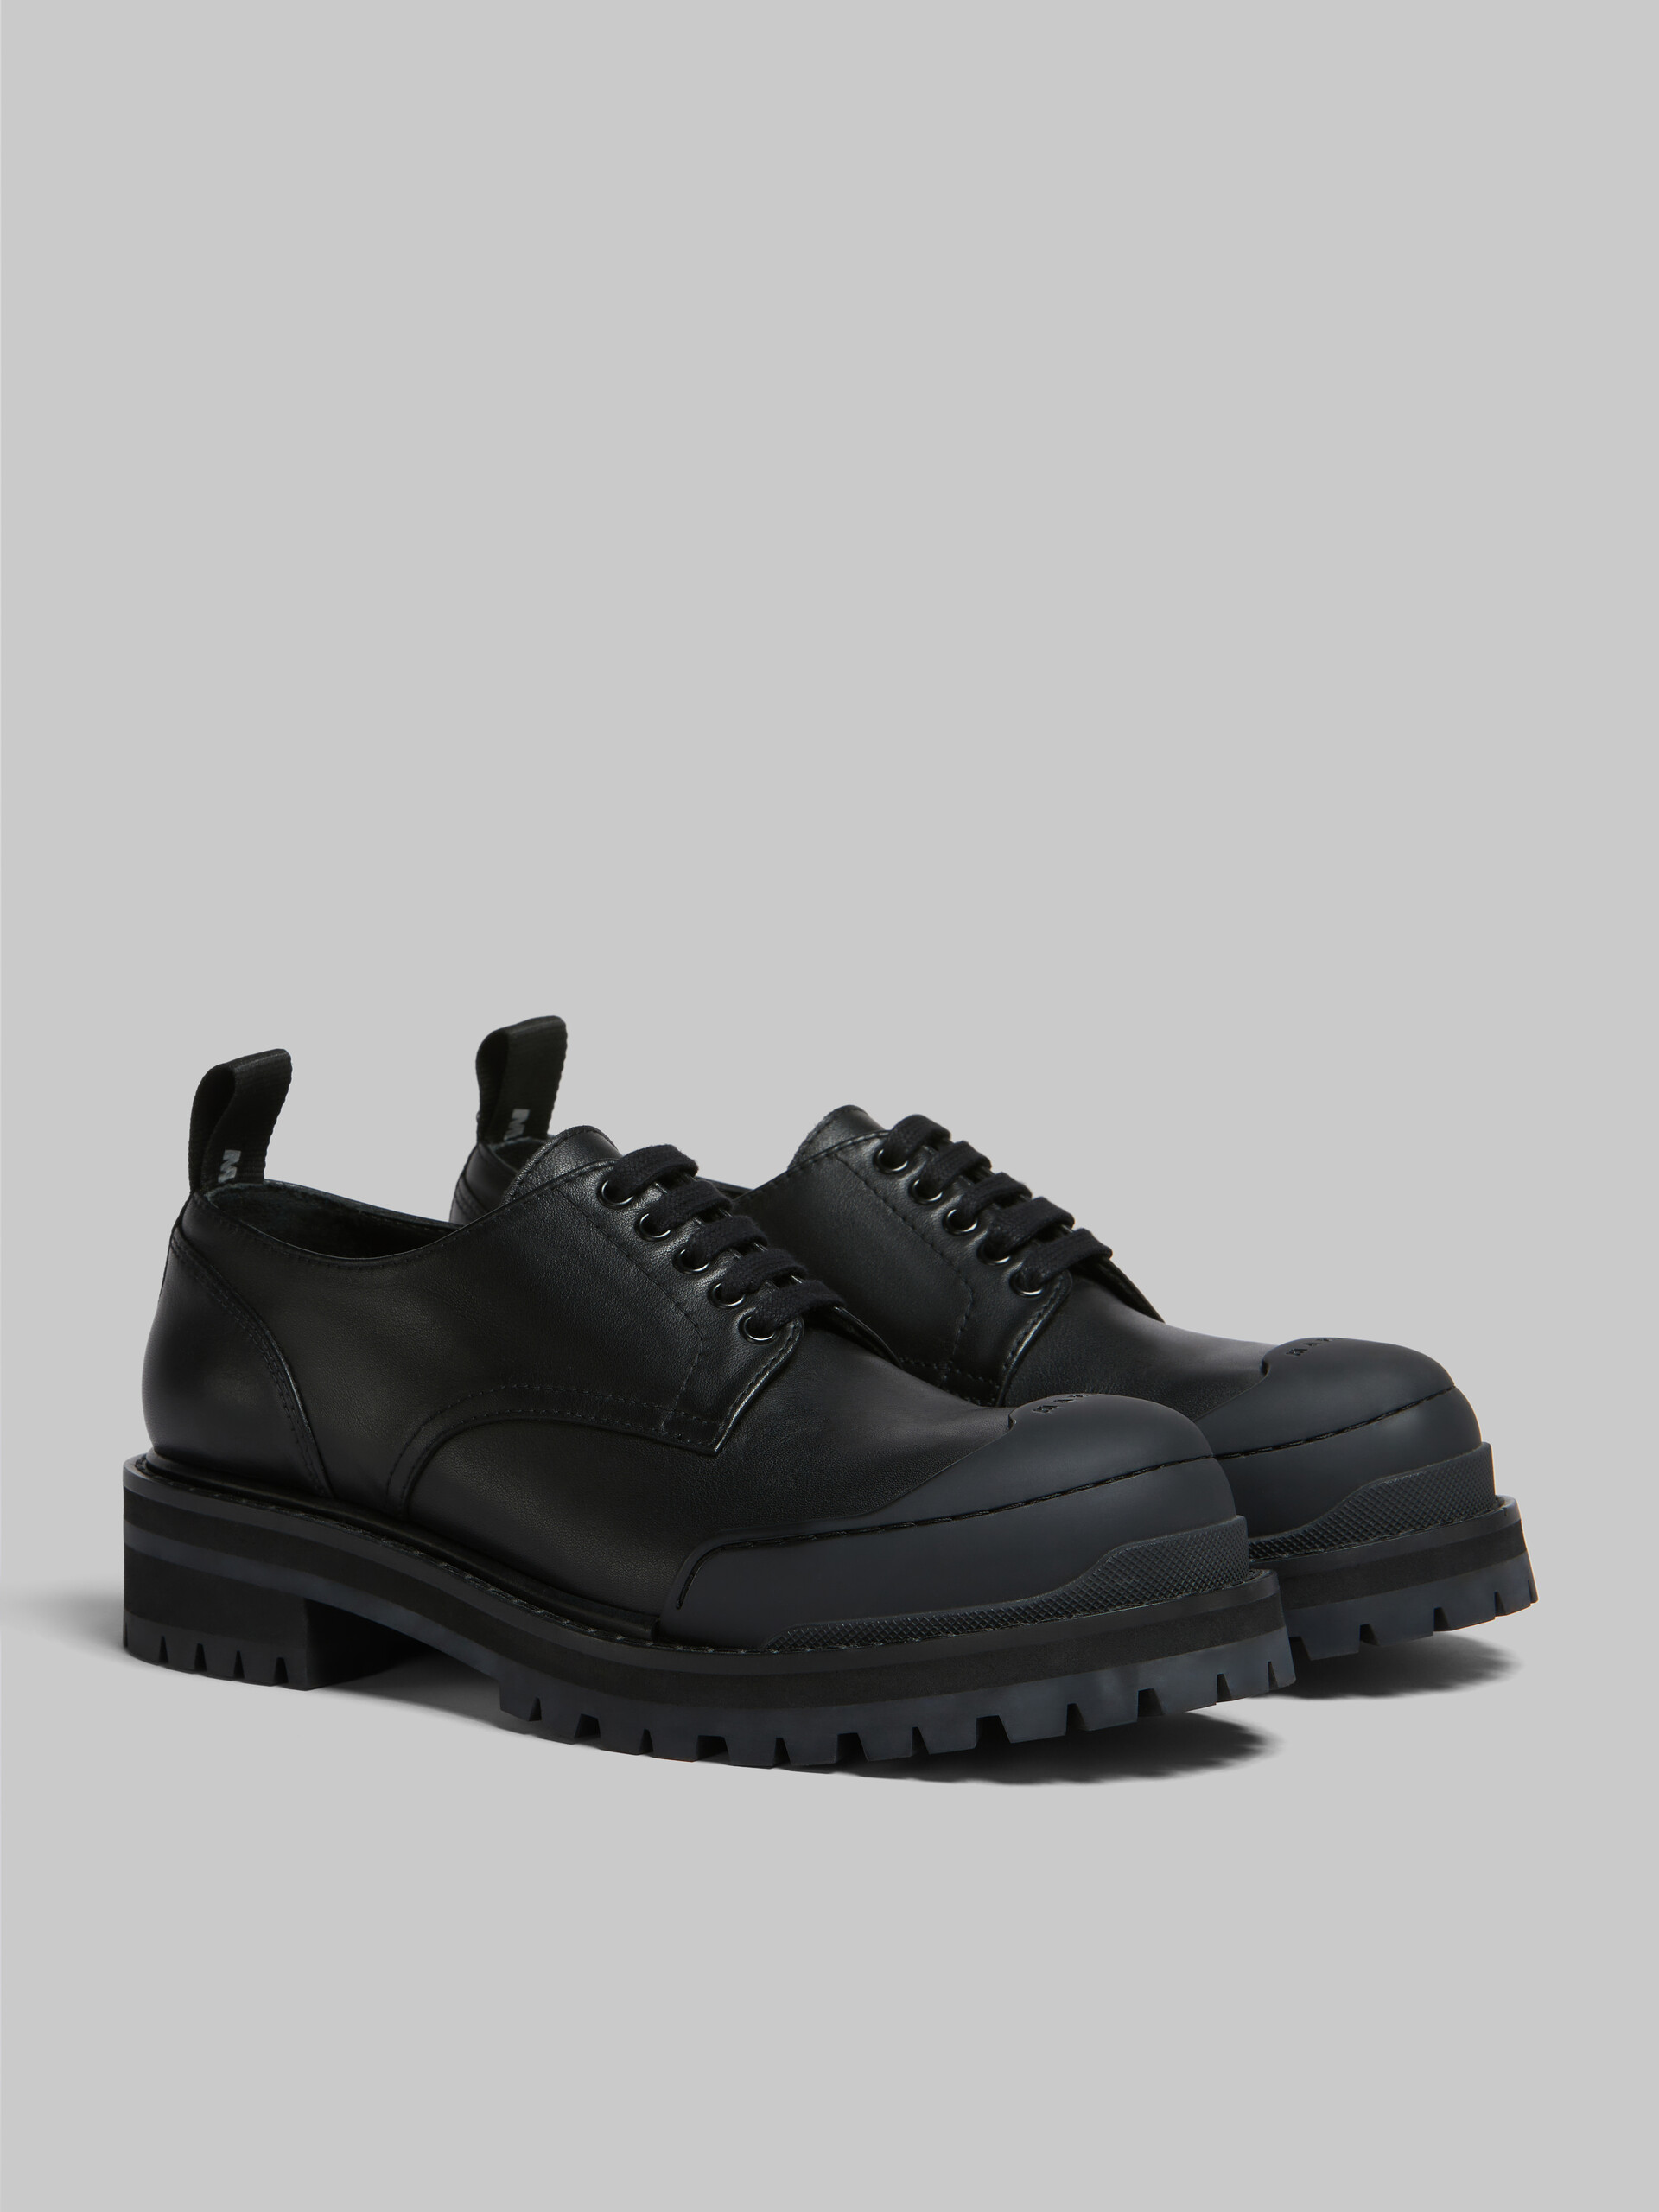 Chaussures derby Dada Army en cuir noir - Chaussures à Lacets - Image 2